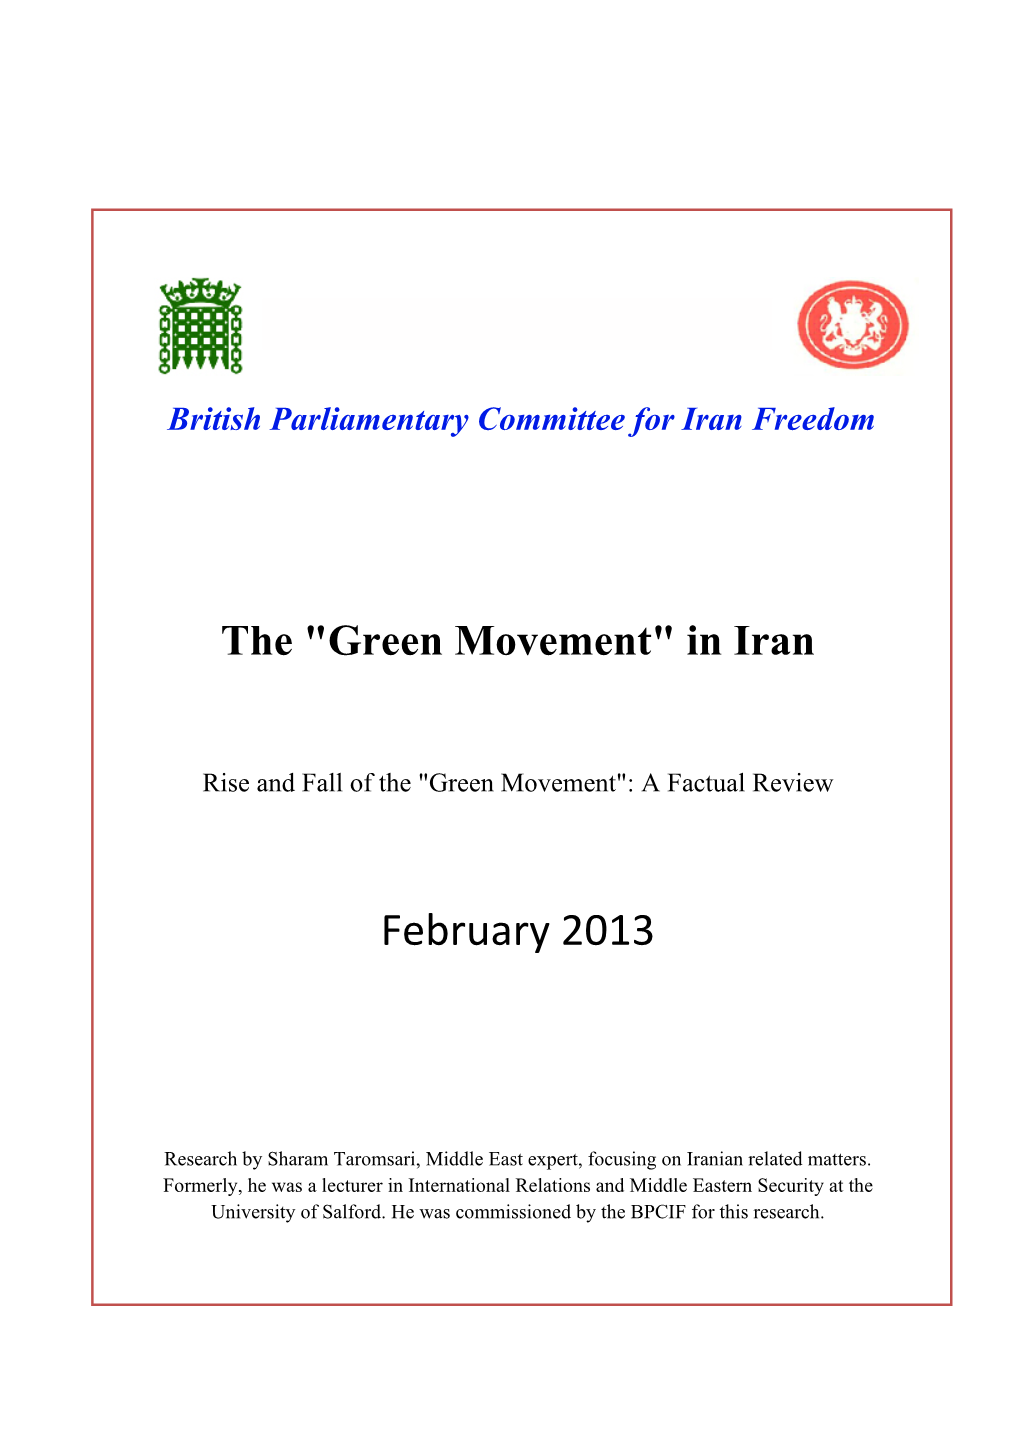 Green Movement" in Iran